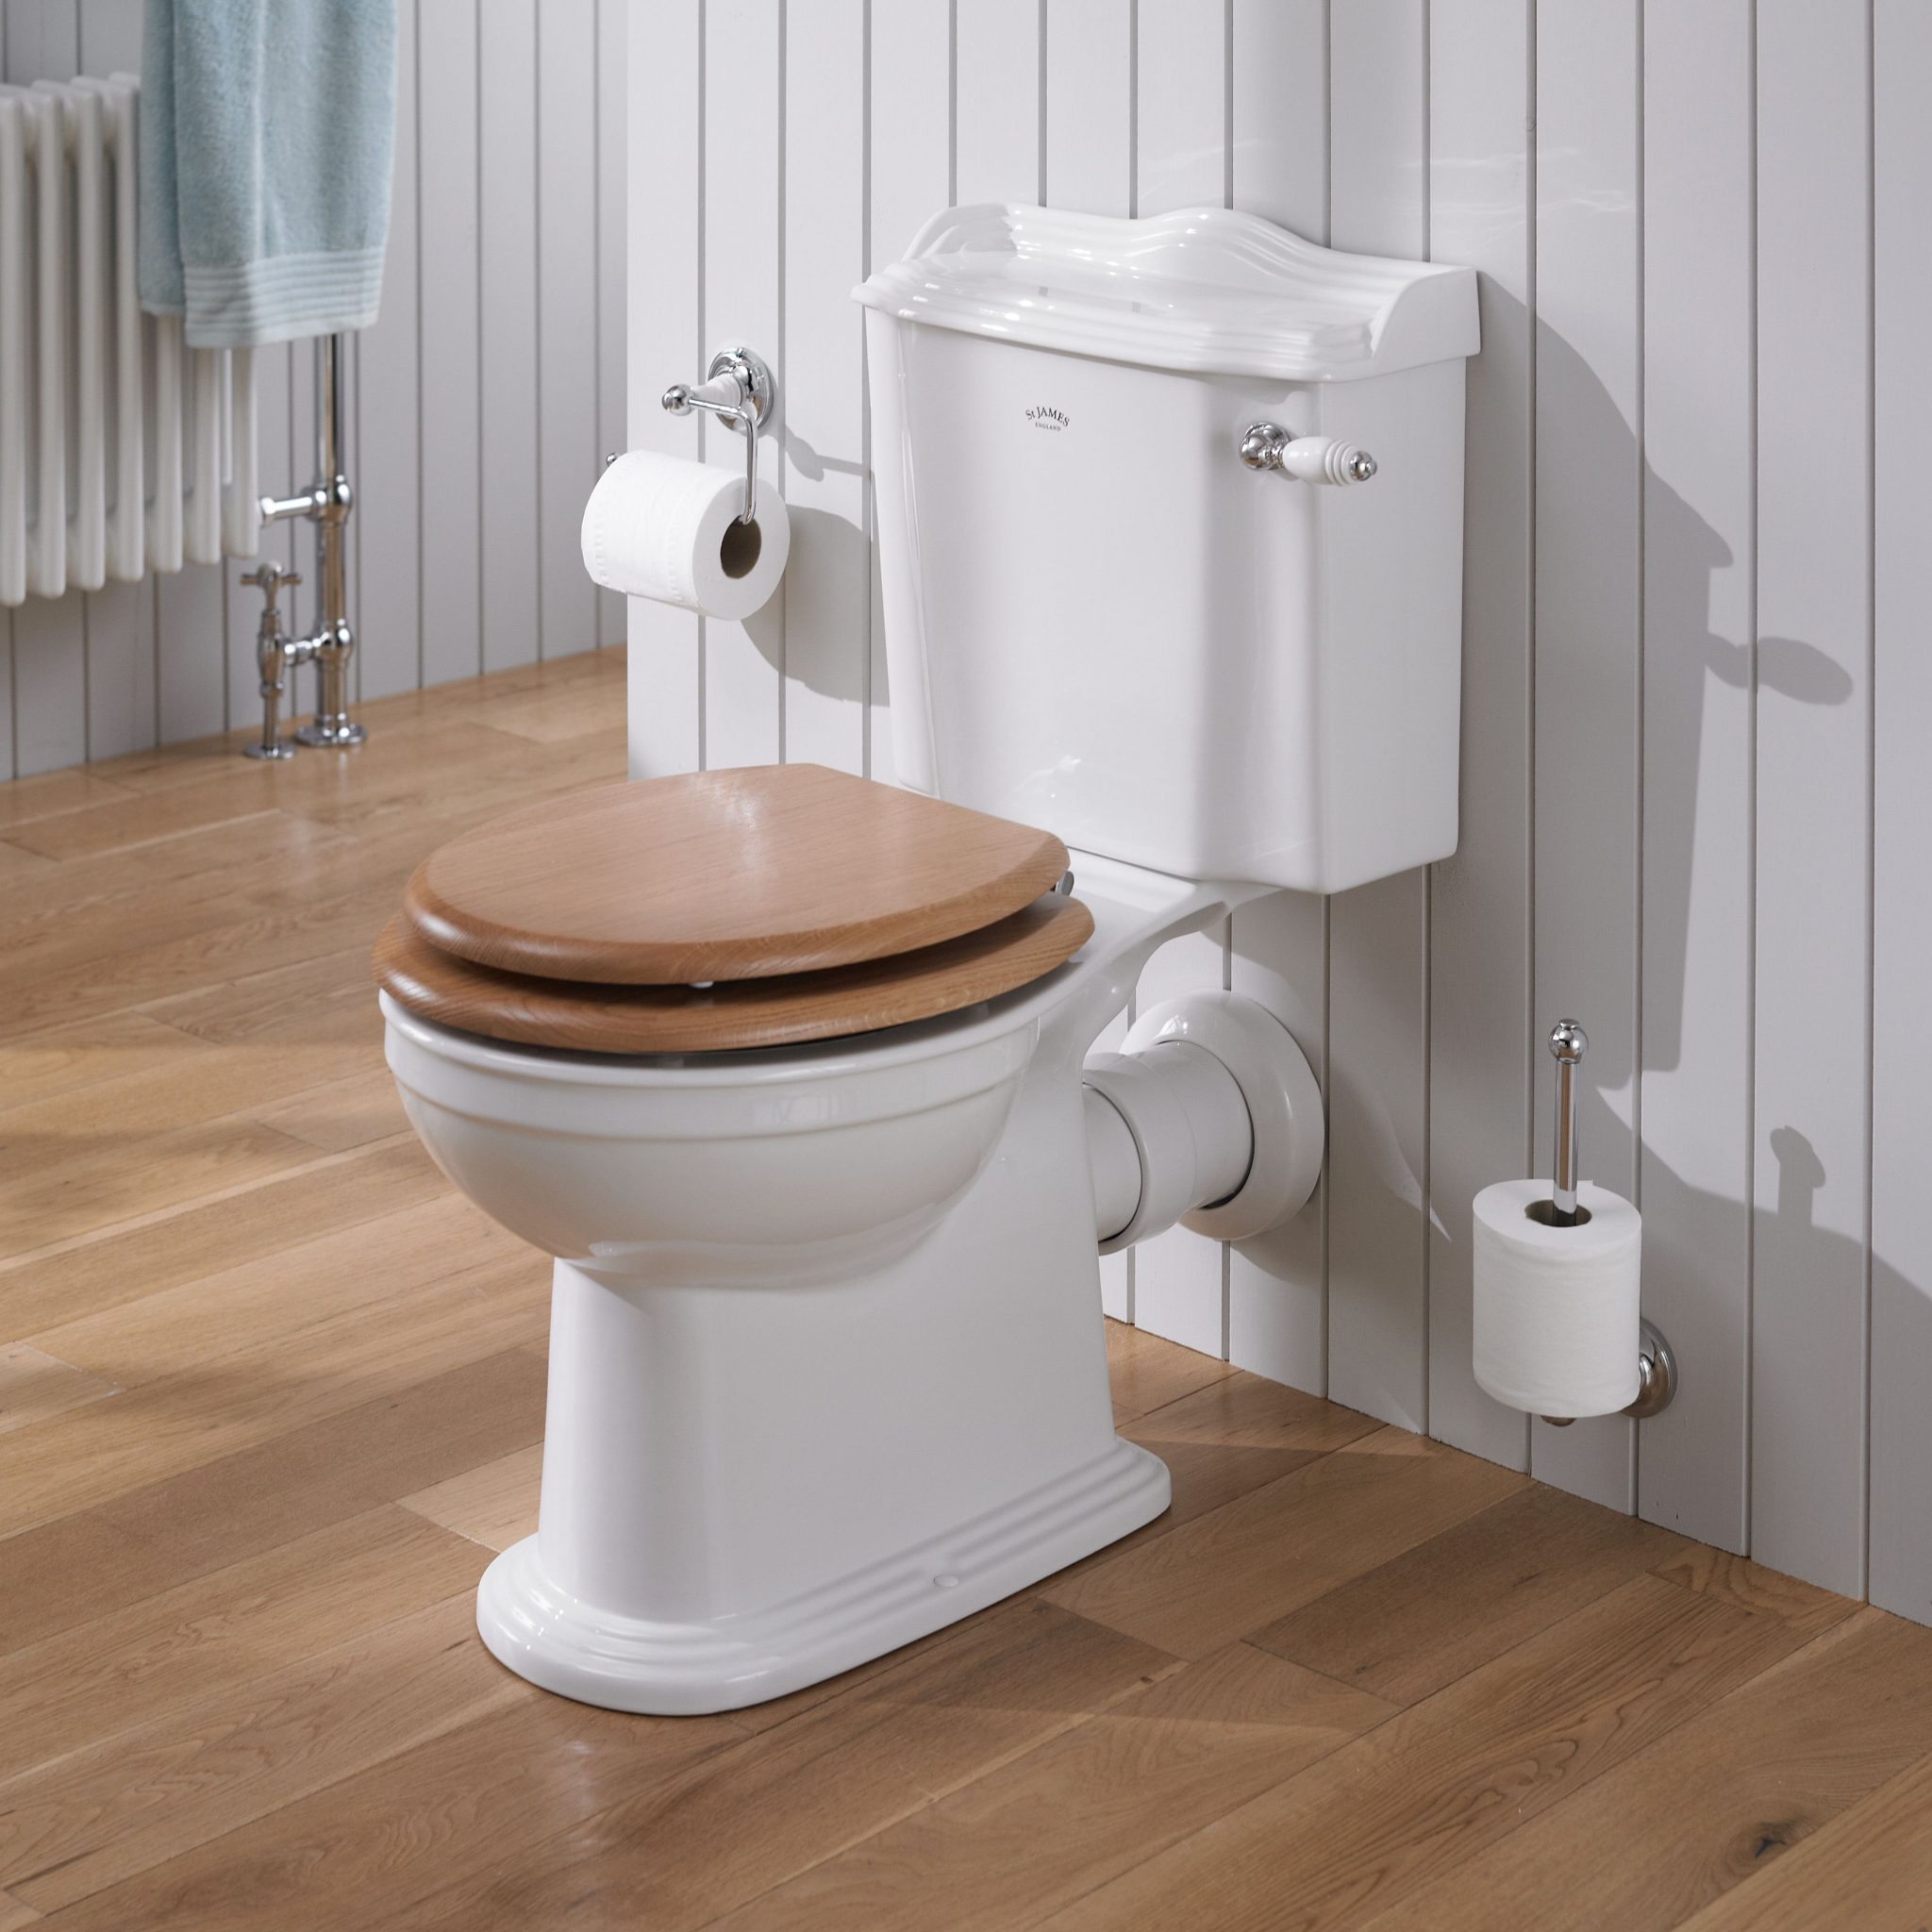 st-james-hampton-close-coupled-toilet.jpg